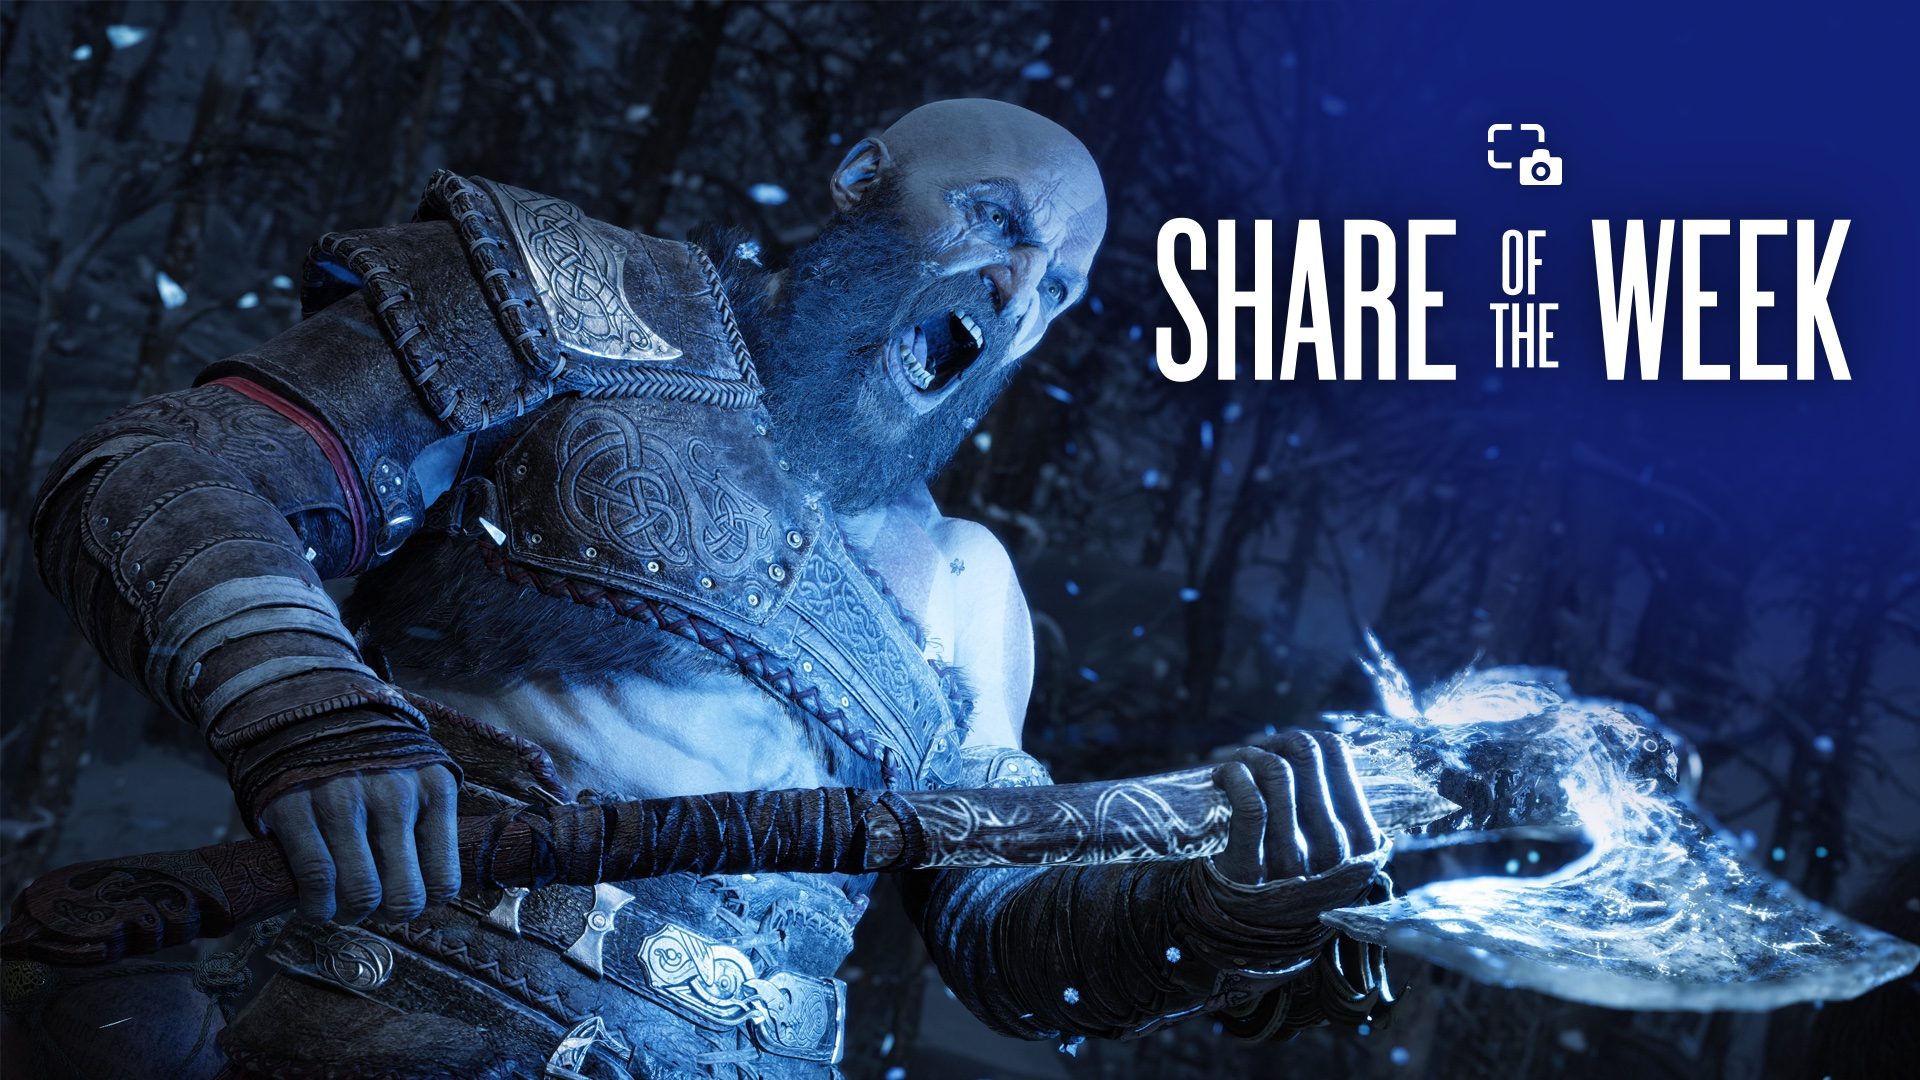 God of War Ragnarök Photo Mode tips from community virtual photographers –  PlayStation.Blog